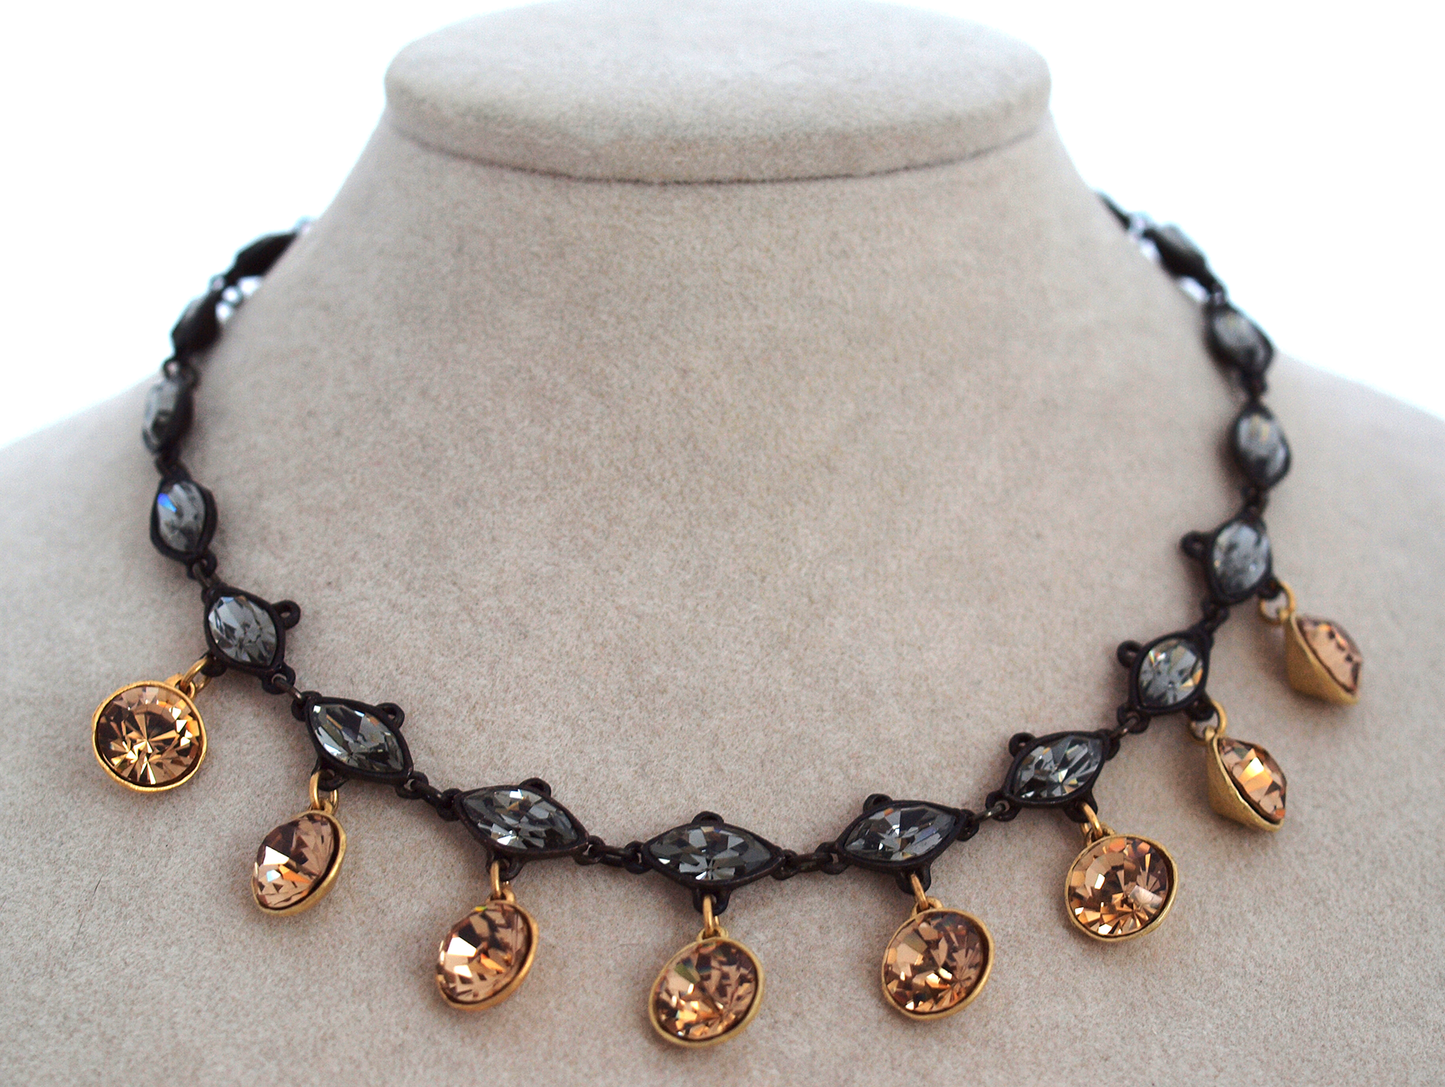 Golden Persephone necklace